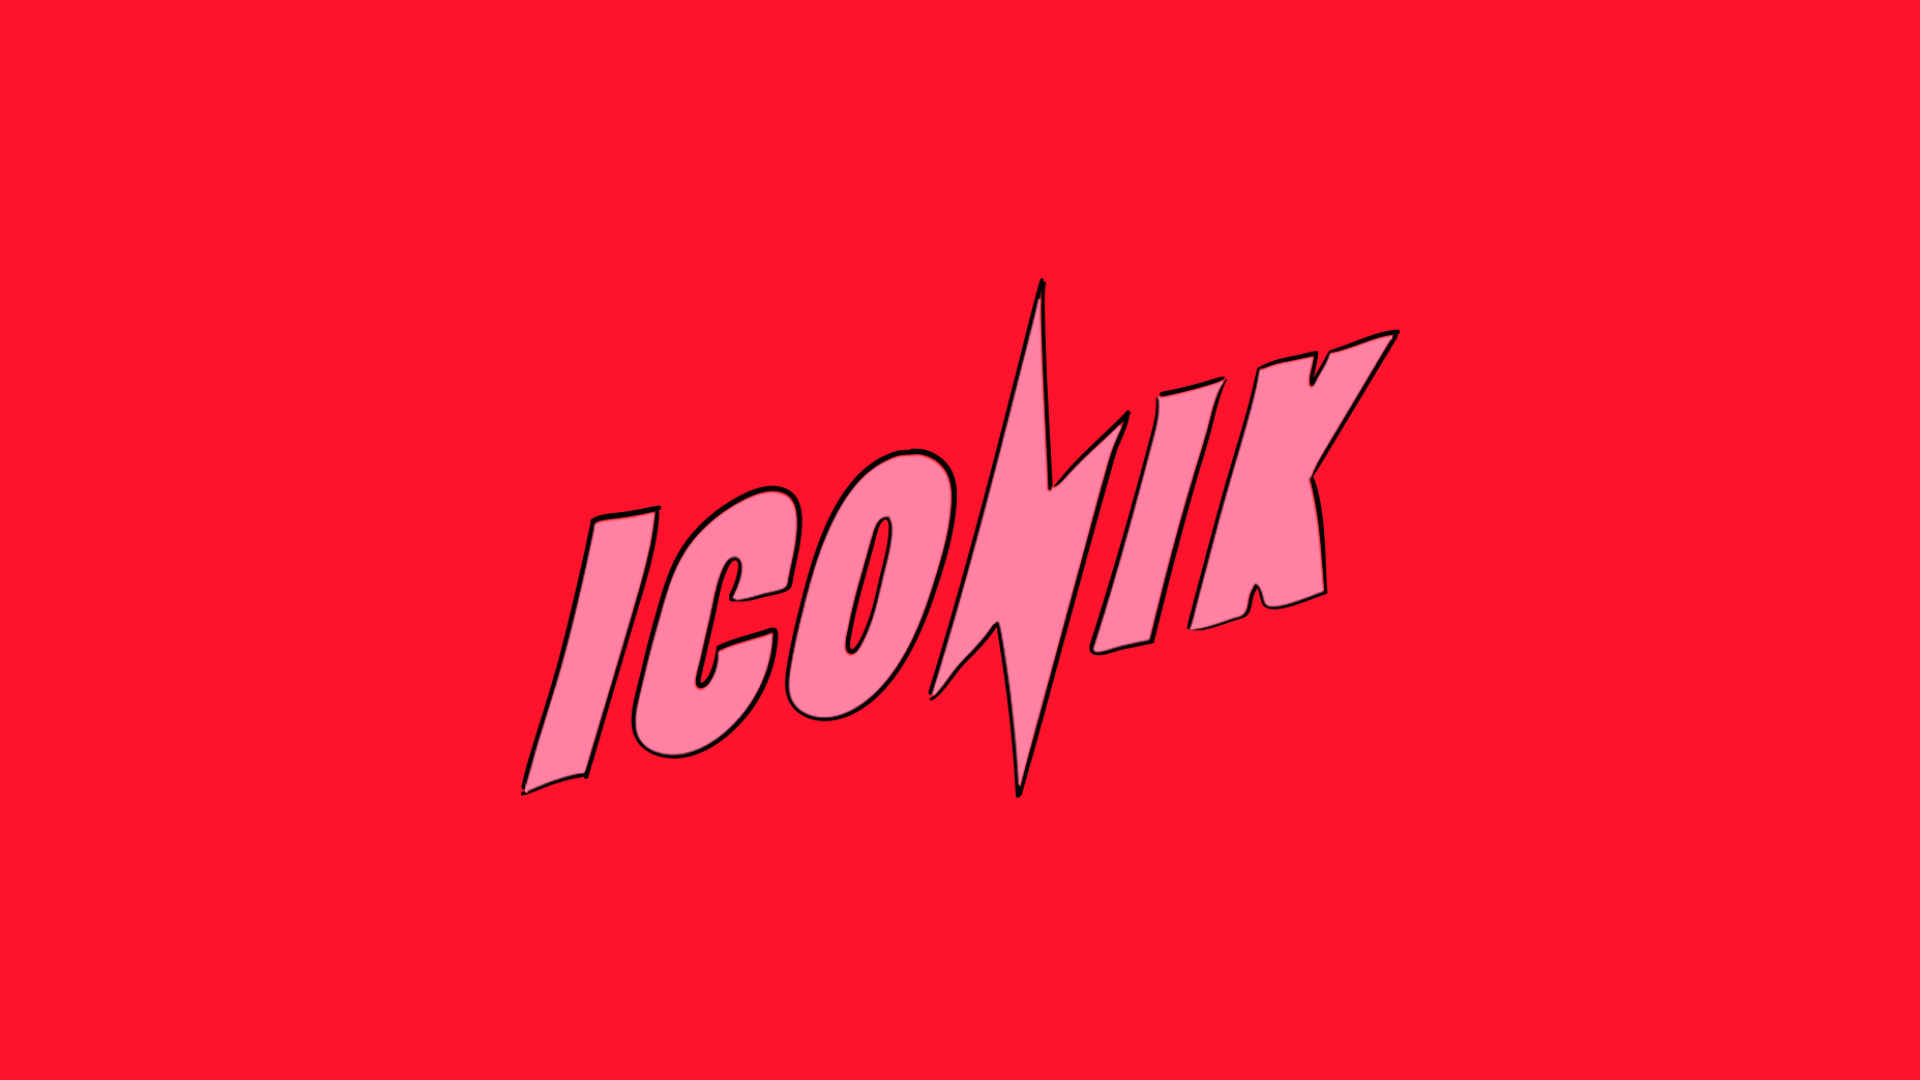 iconik logo social media